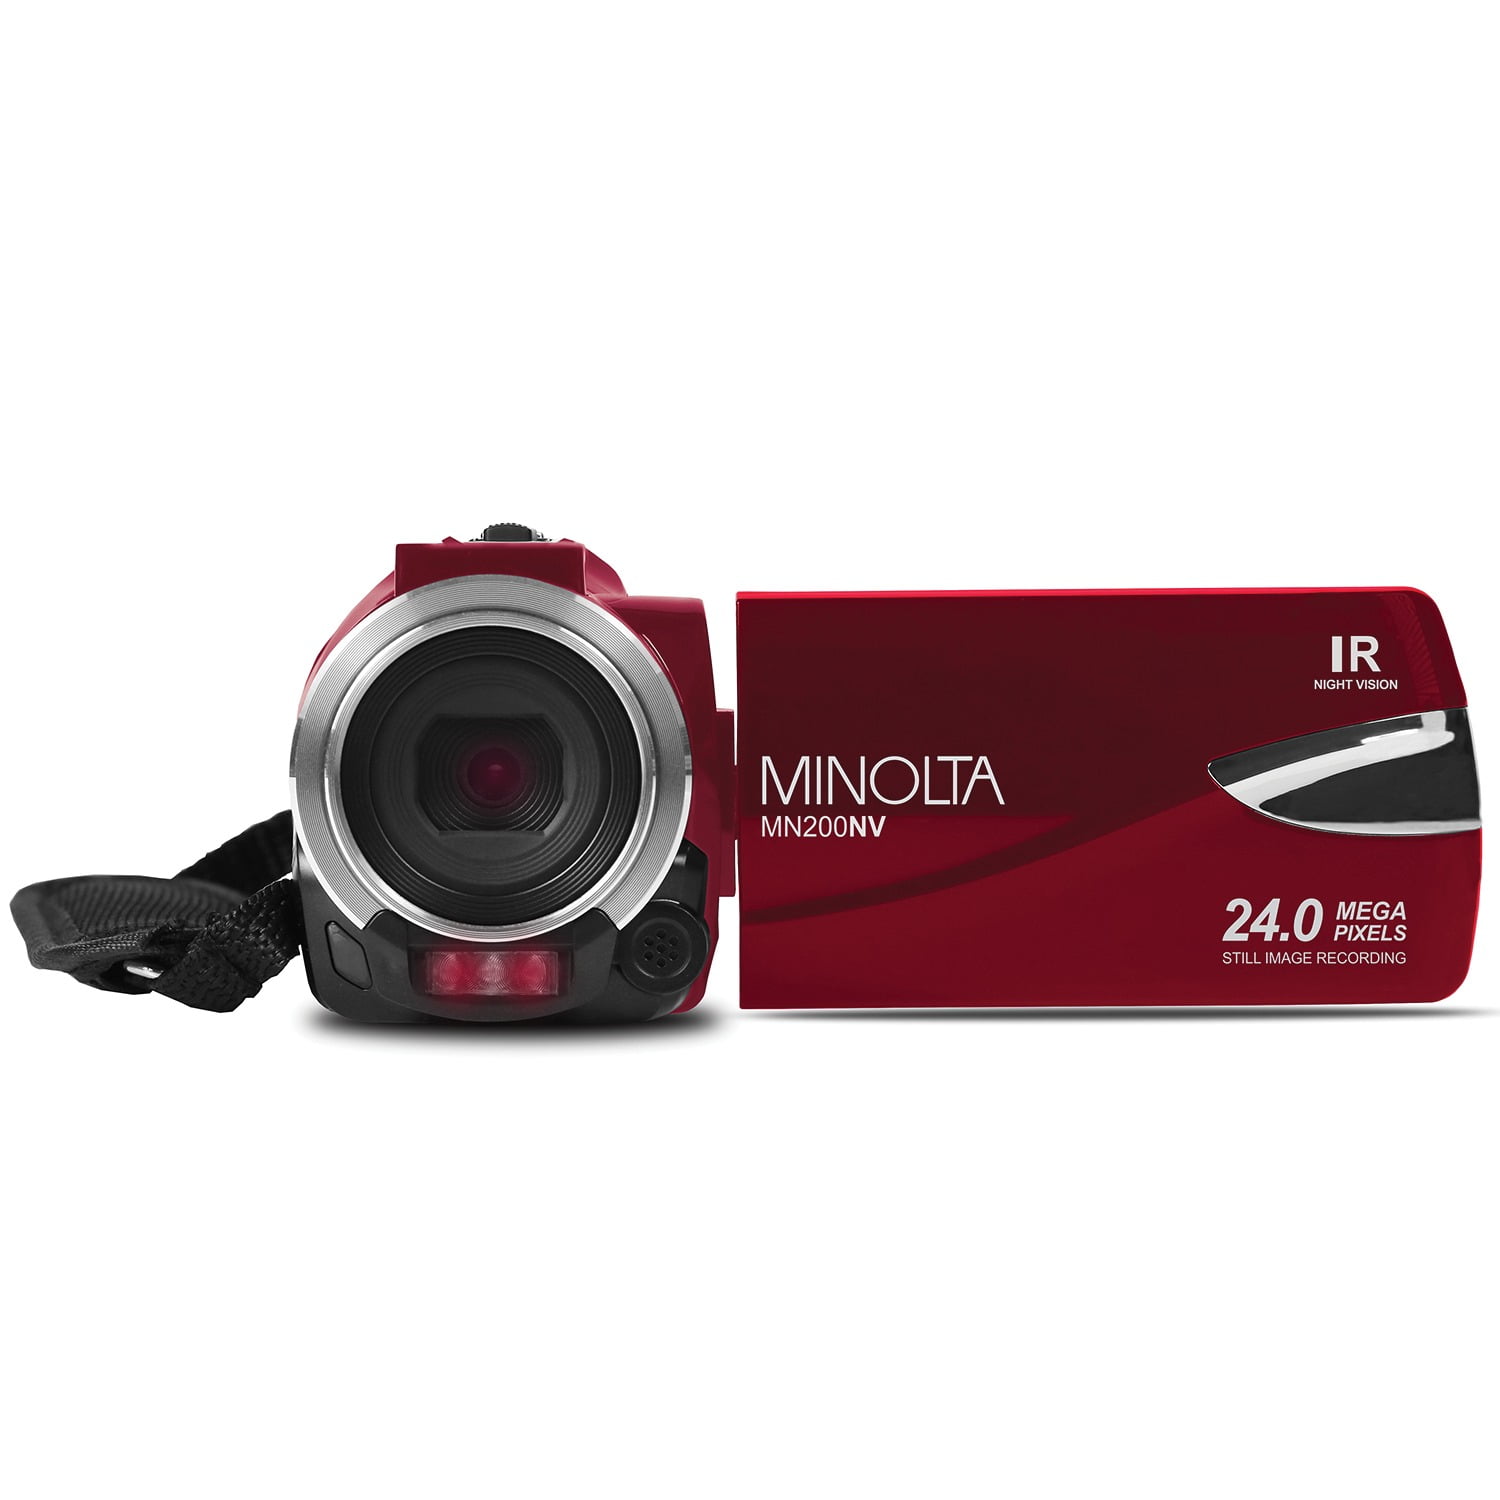 Konica Minolta MN200NV-R 1080p Full HD IR Night Vision Wi-Fi Camcorder (Red)